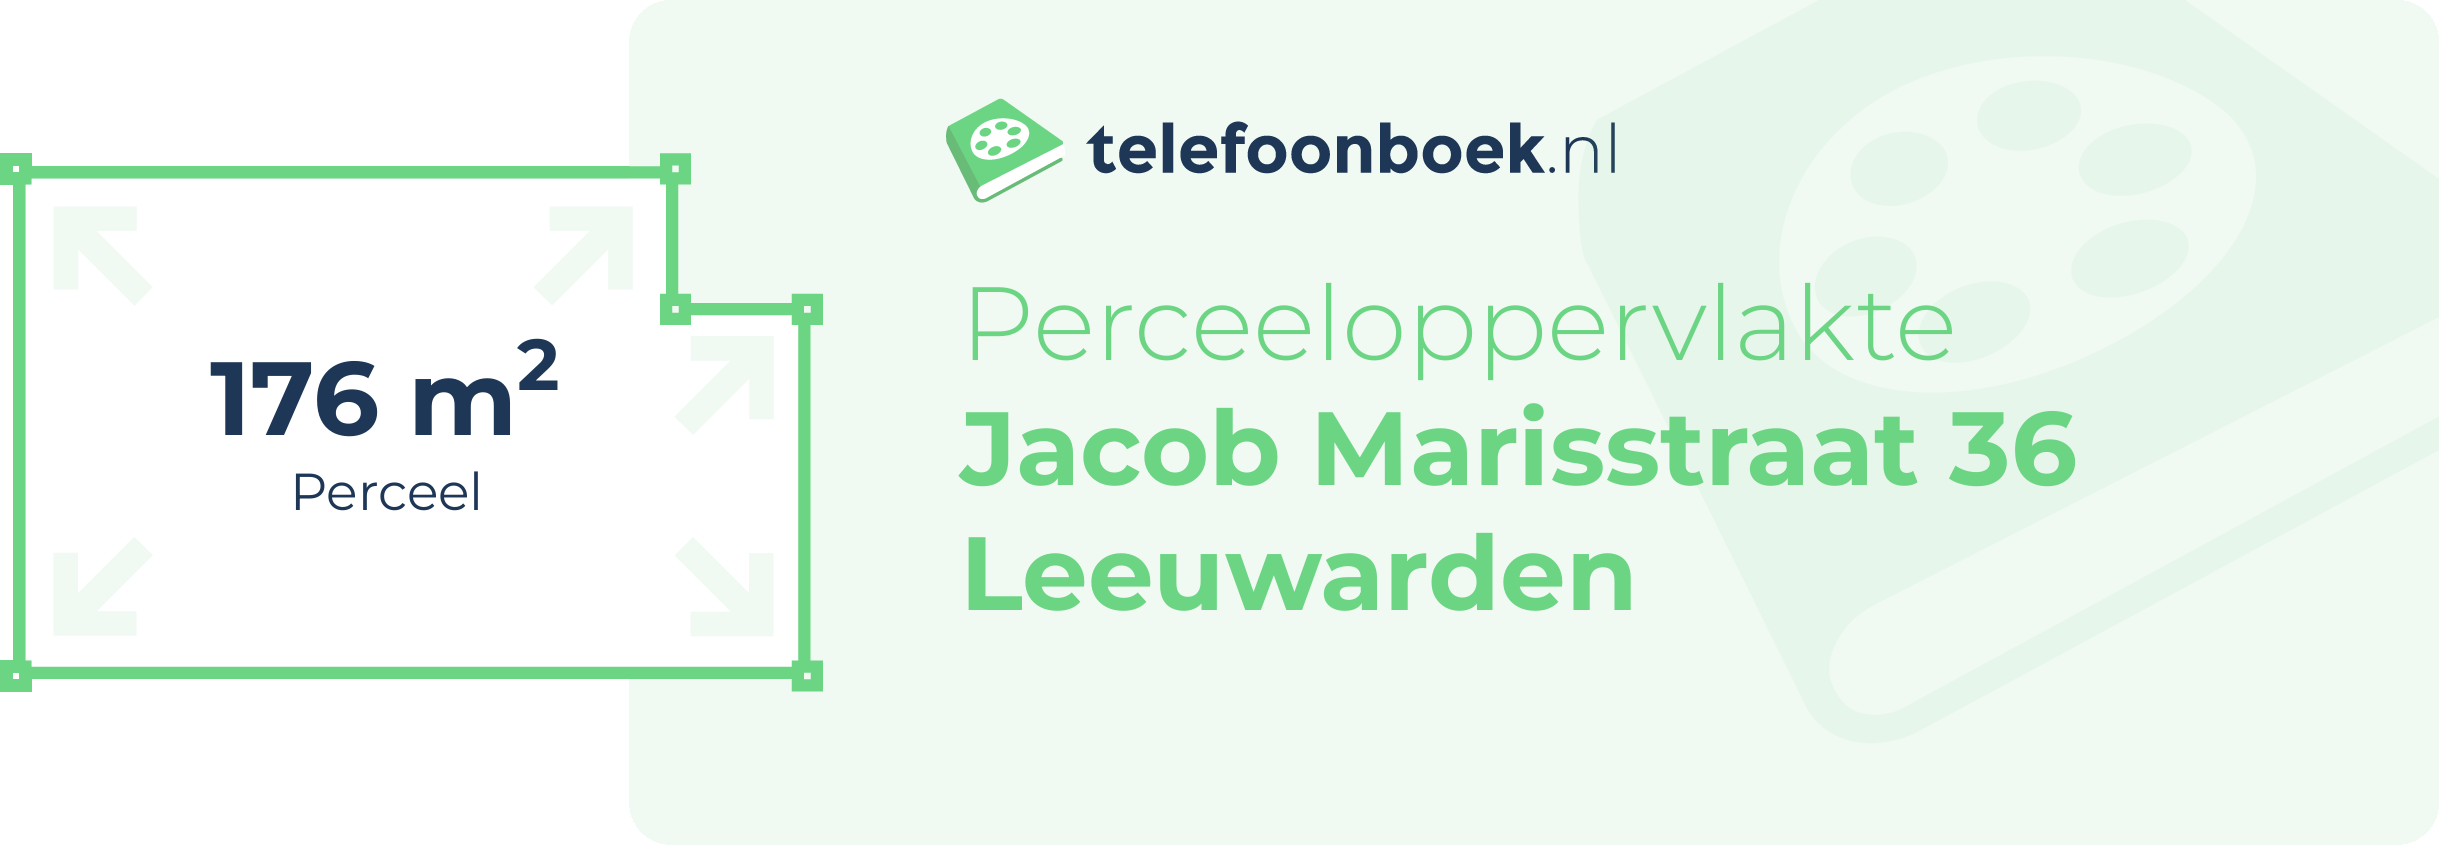 Perceeloppervlakte Jacob Marisstraat 36 Leeuwarden